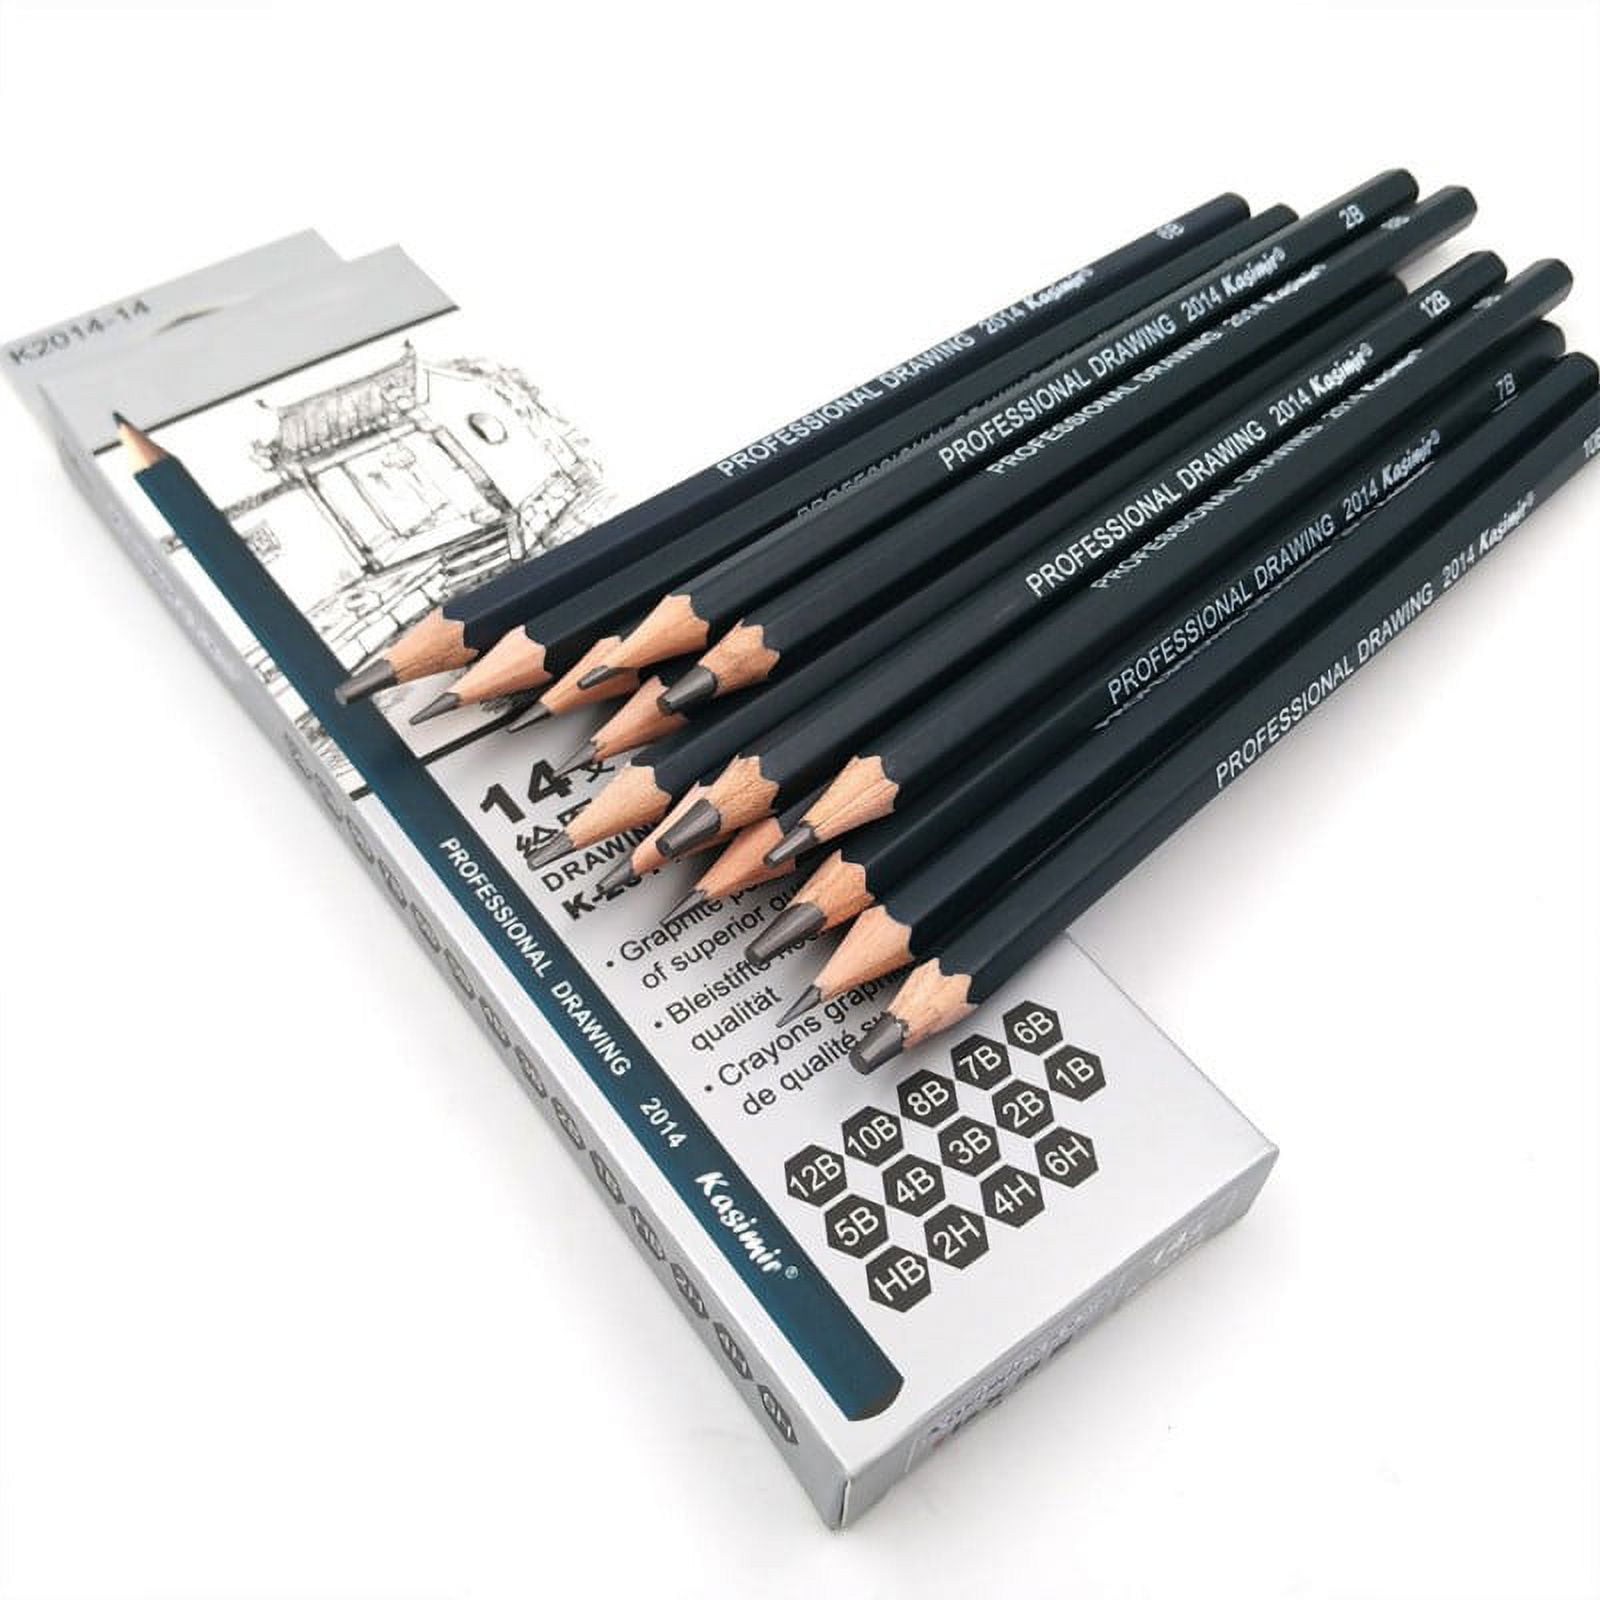 General Pencil 497BP Semi-Hex Graphite Drawing Pencils 4/Pkg-HB, 2B, 4B, &  6B, HB 2B 4B & 6B